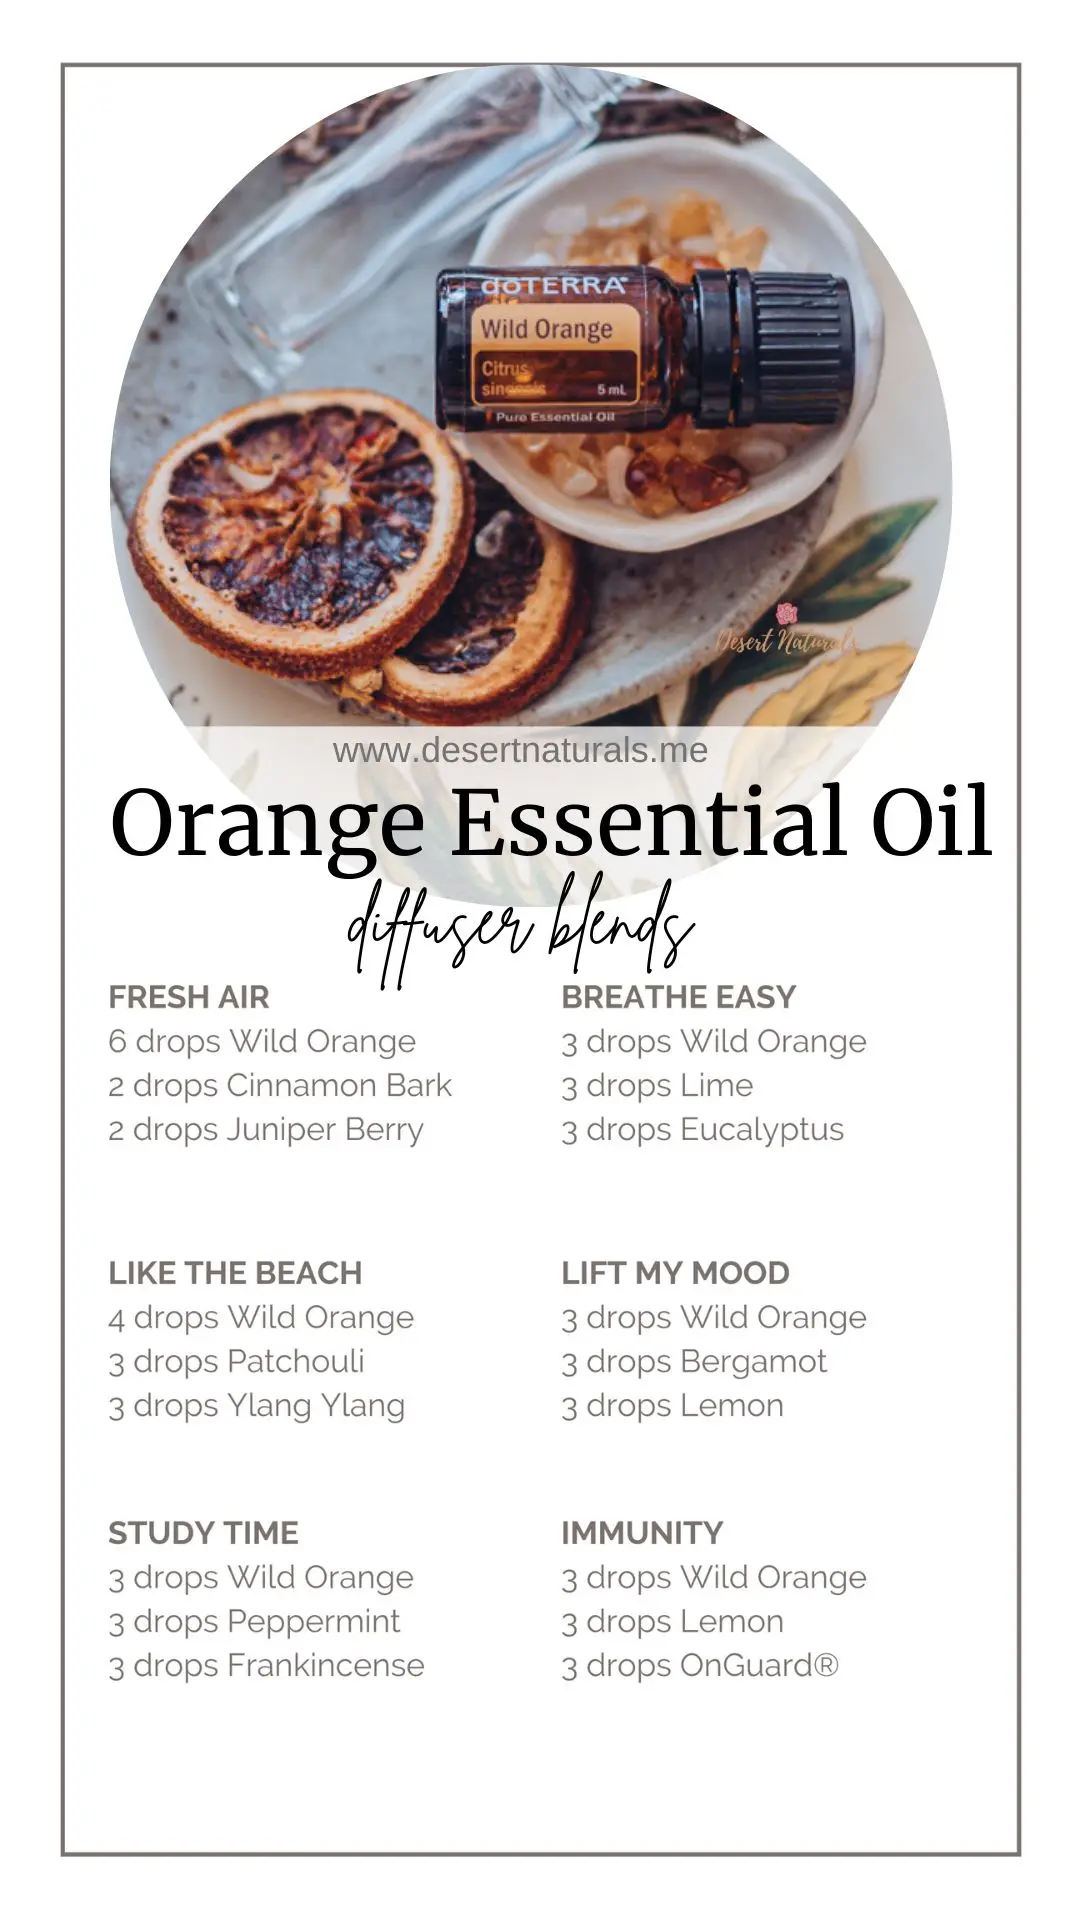 wild orange diffuser blends and photo of doterra wild orange essential oil